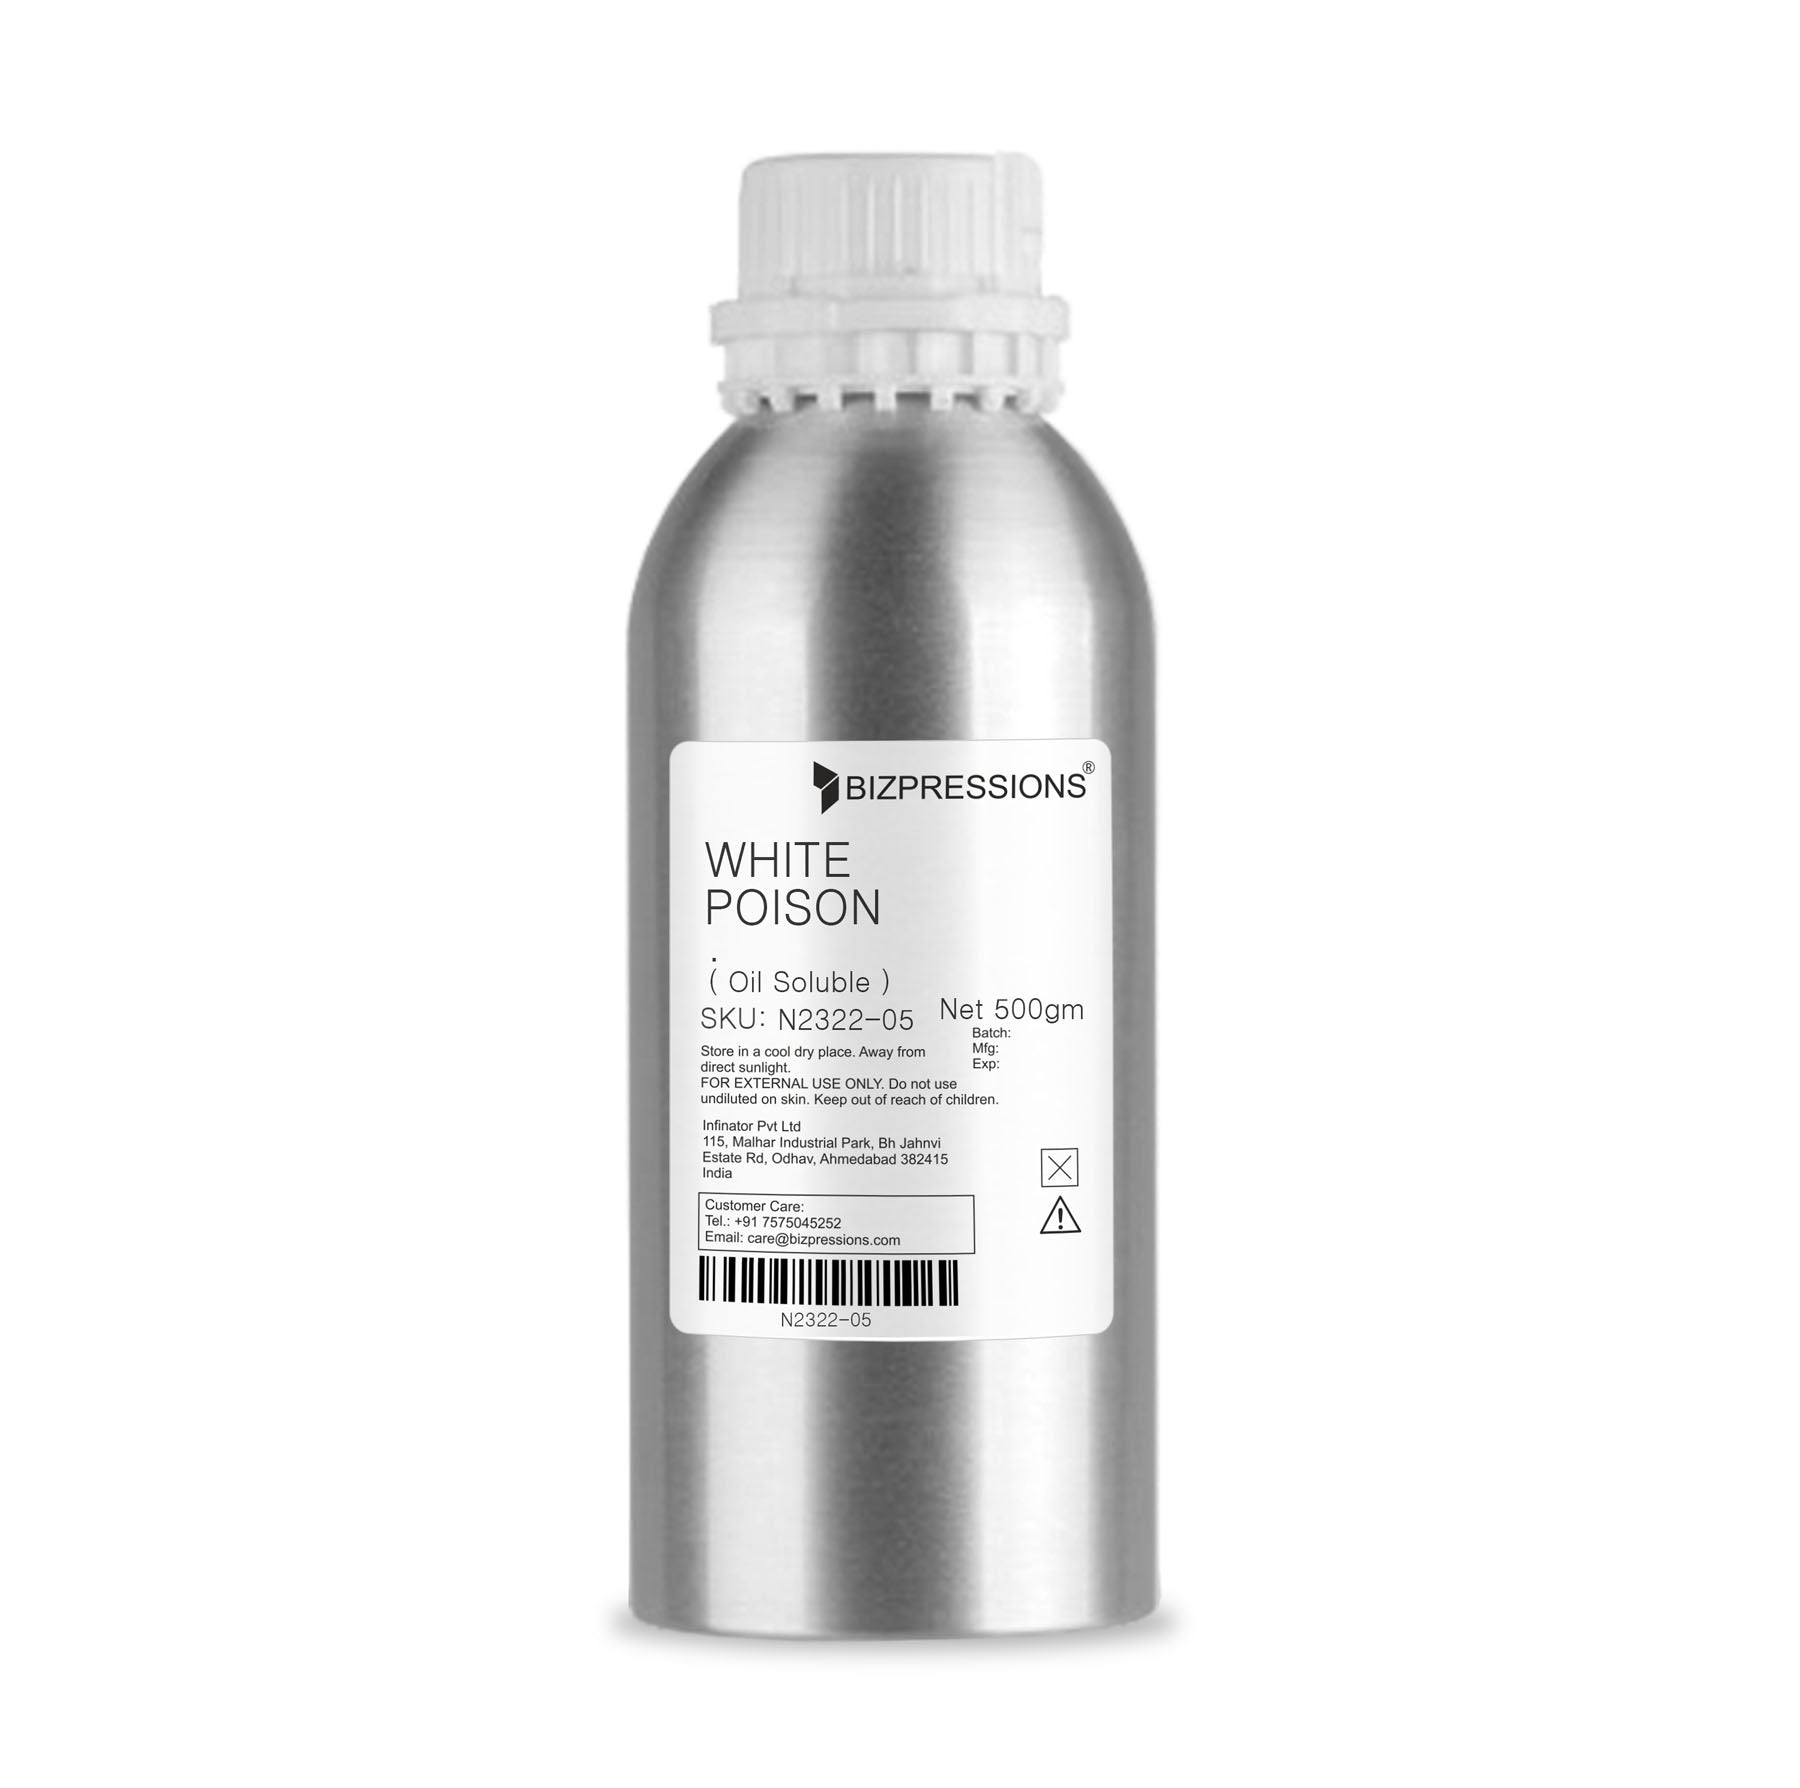 WHITE POISON - Fragrance ( Oil Soluble ) - 500 gm